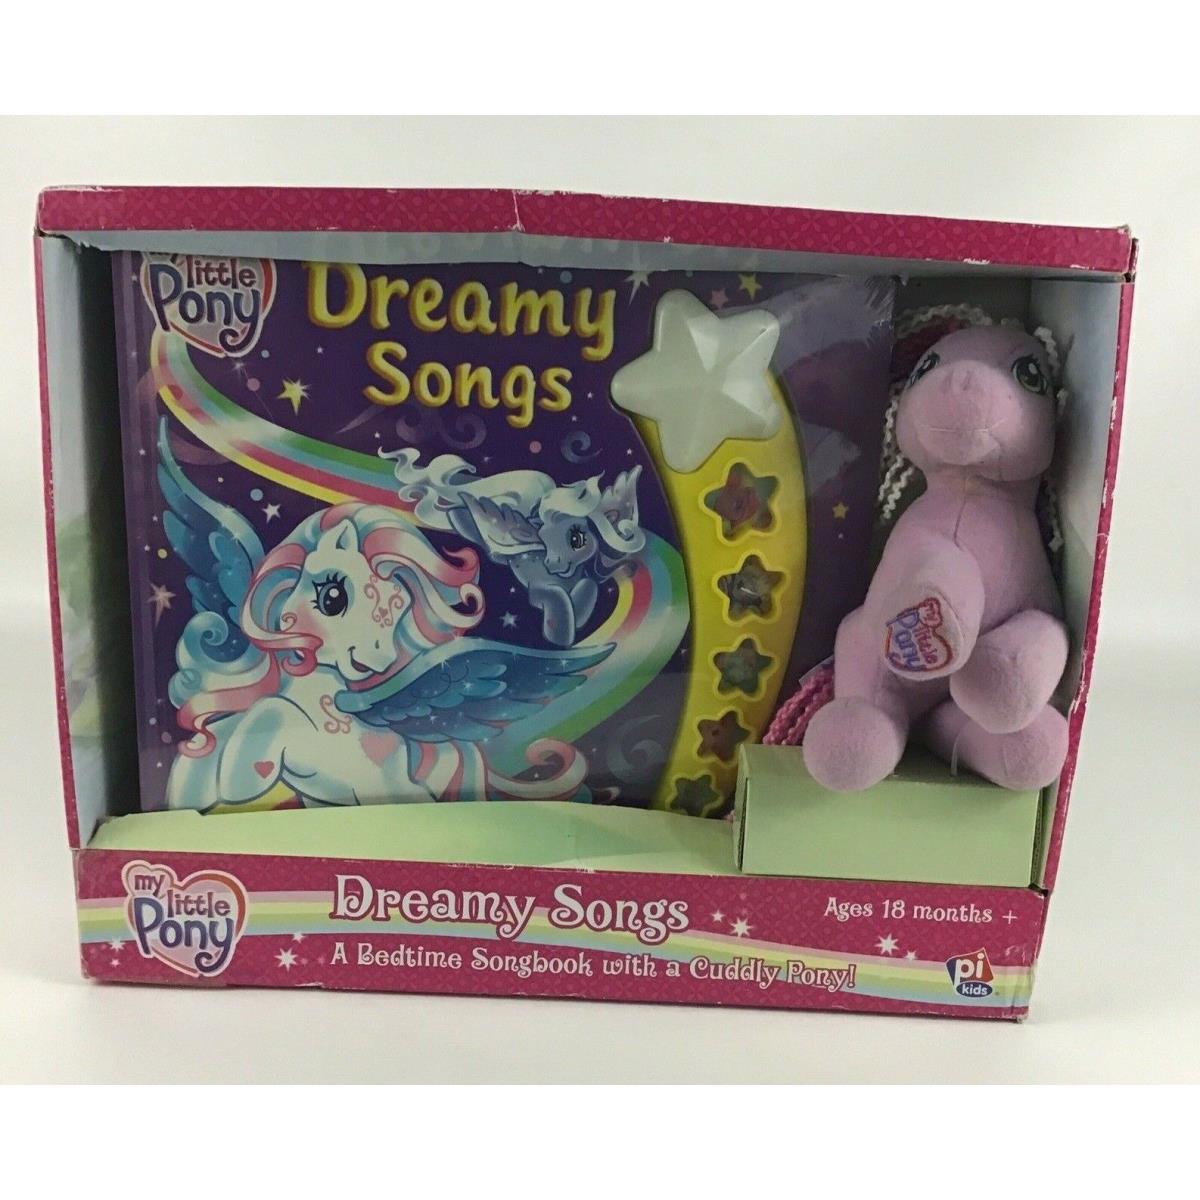 My Little Pony Dreamy Songs Bedtime Songbook Plush Stuffed Animal Toy Hasbro